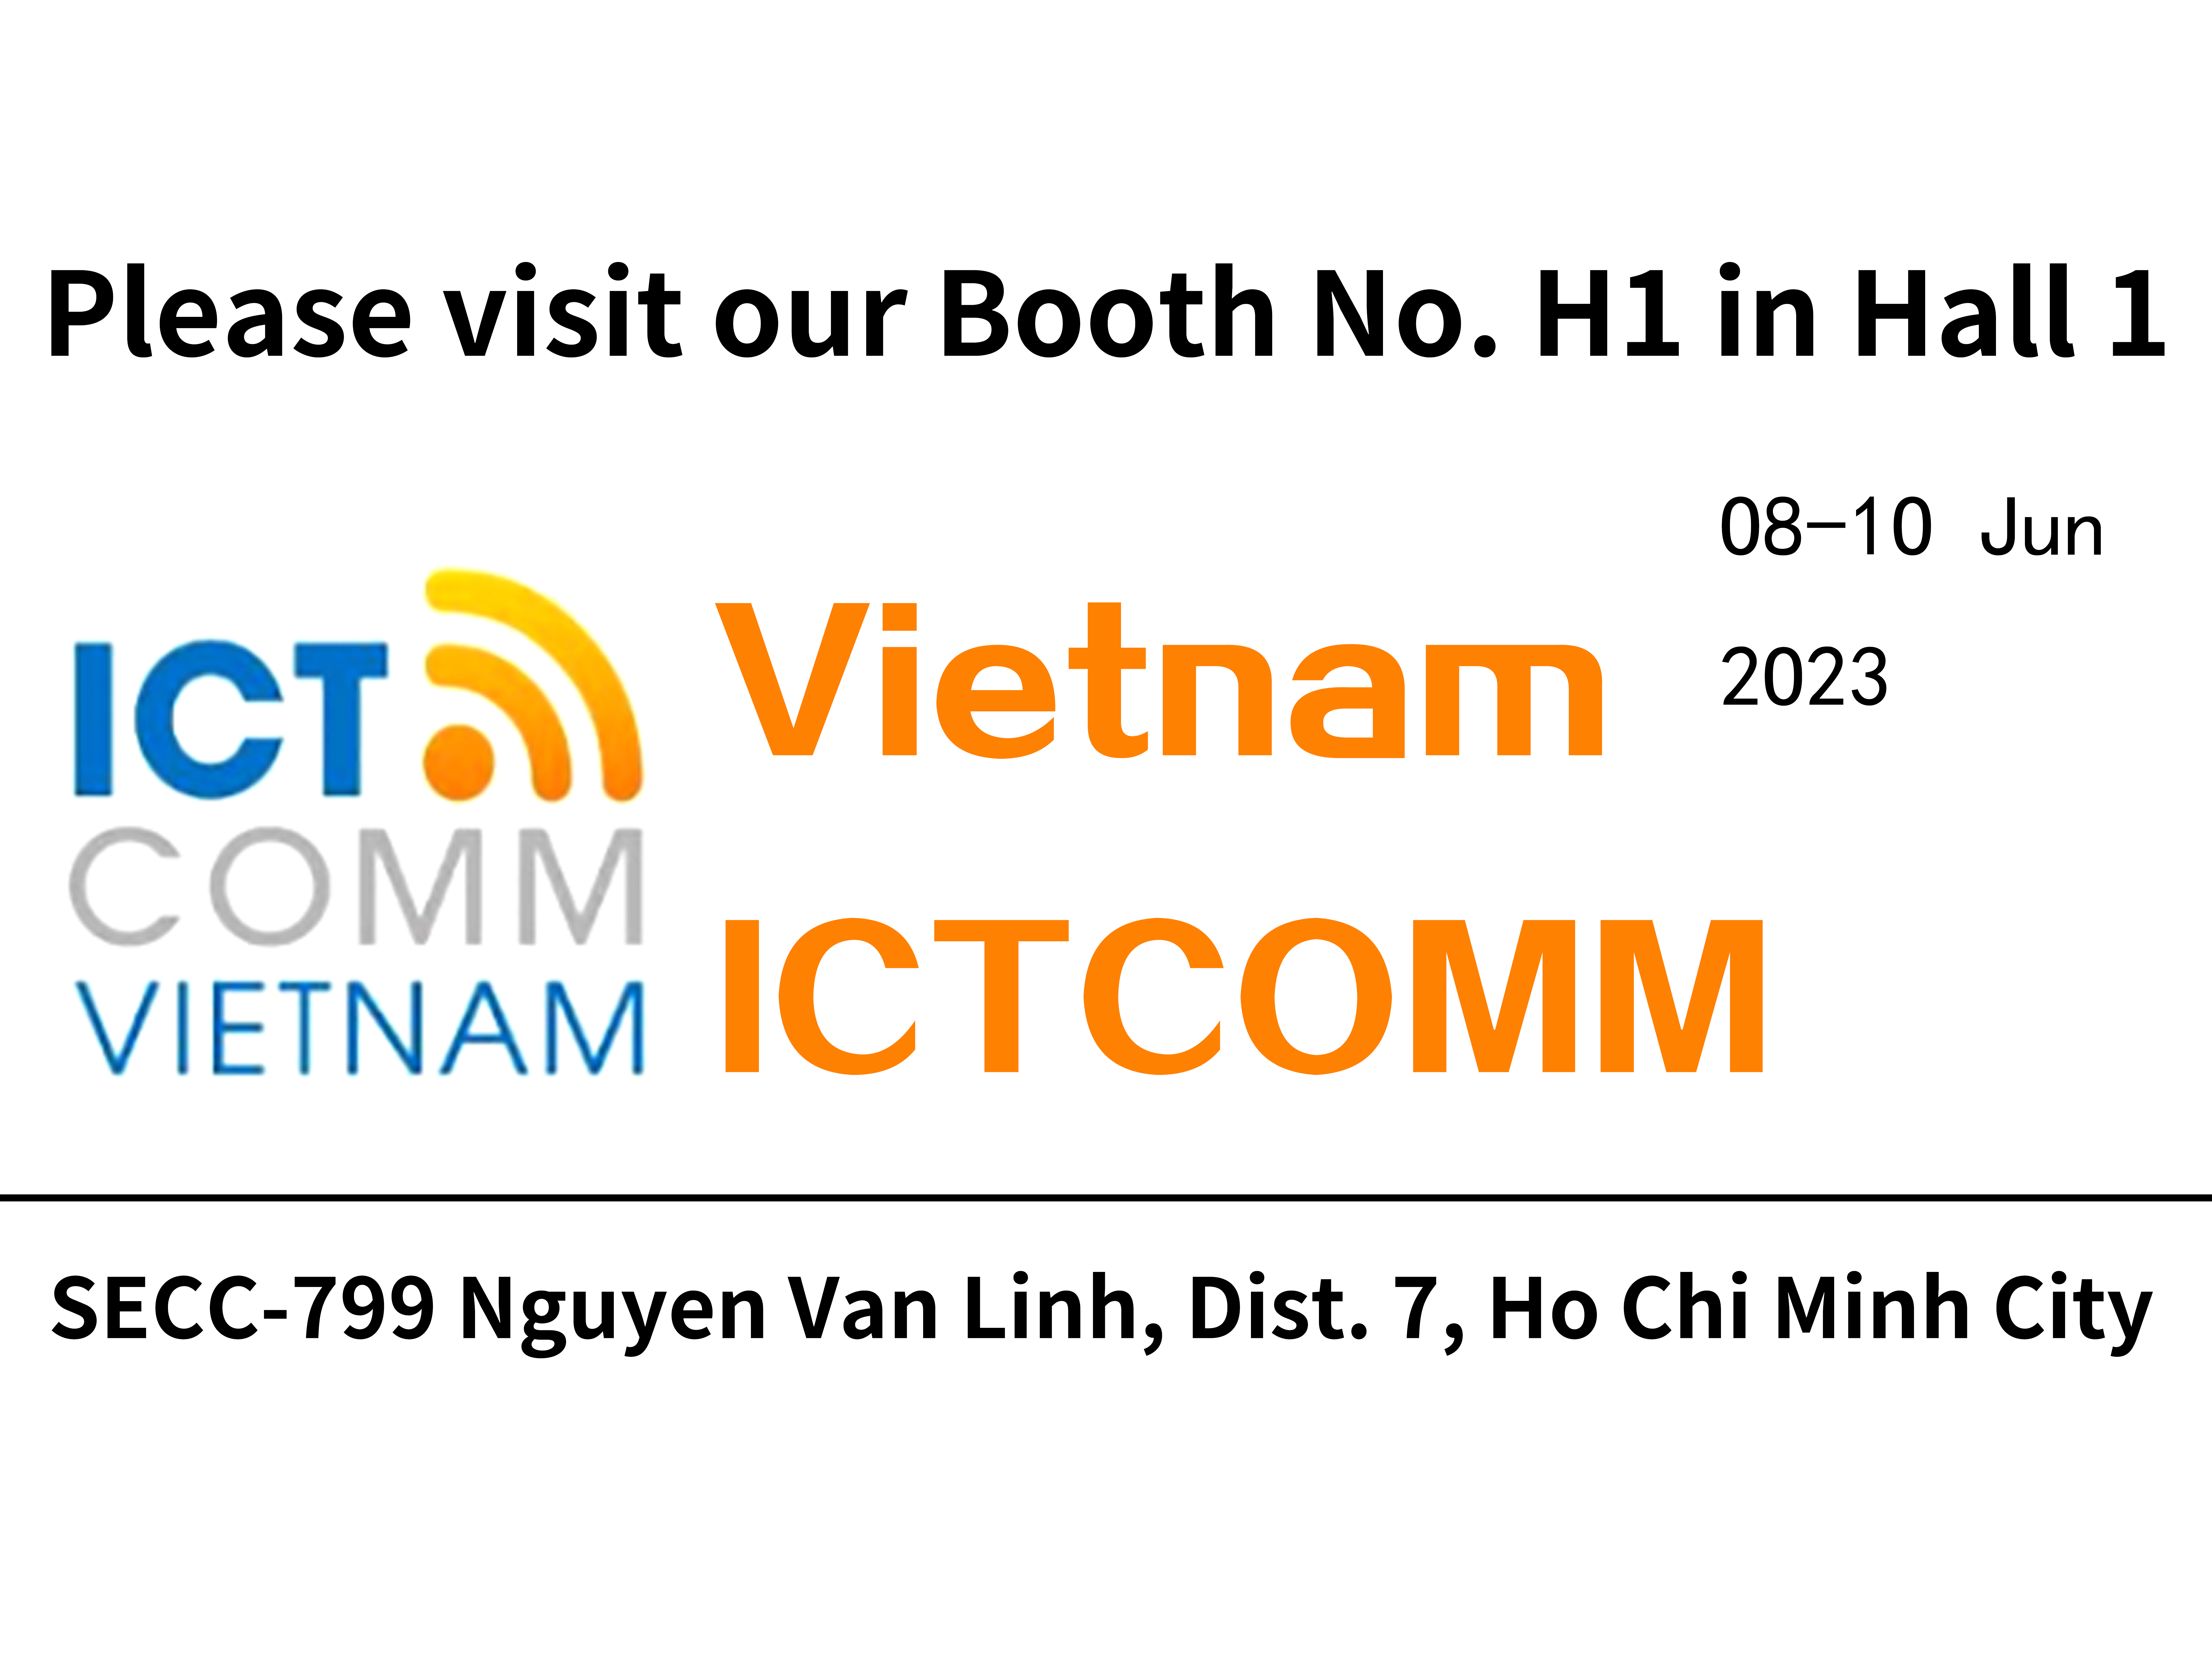 Participate in Vietnam ICTCOMM Exhibition from June 08 - 10, 2023